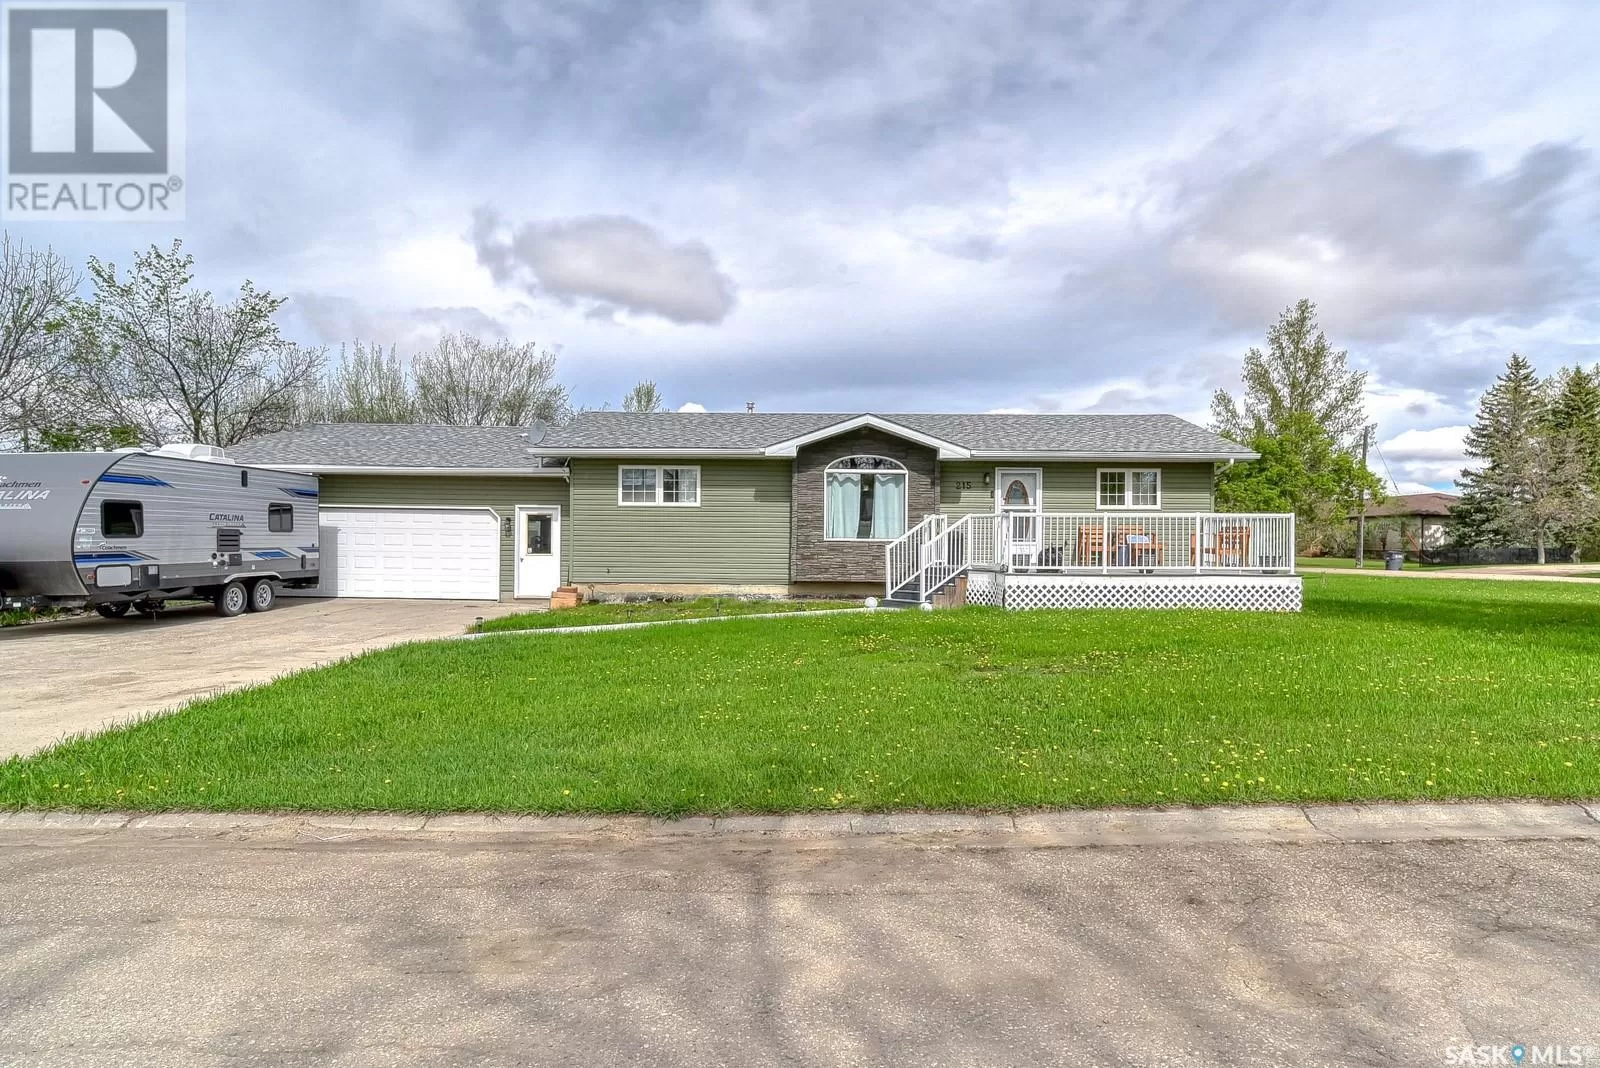 House for rent: 215 Wetmore Street, Rouleau, Saskatchewan S0G 4H0